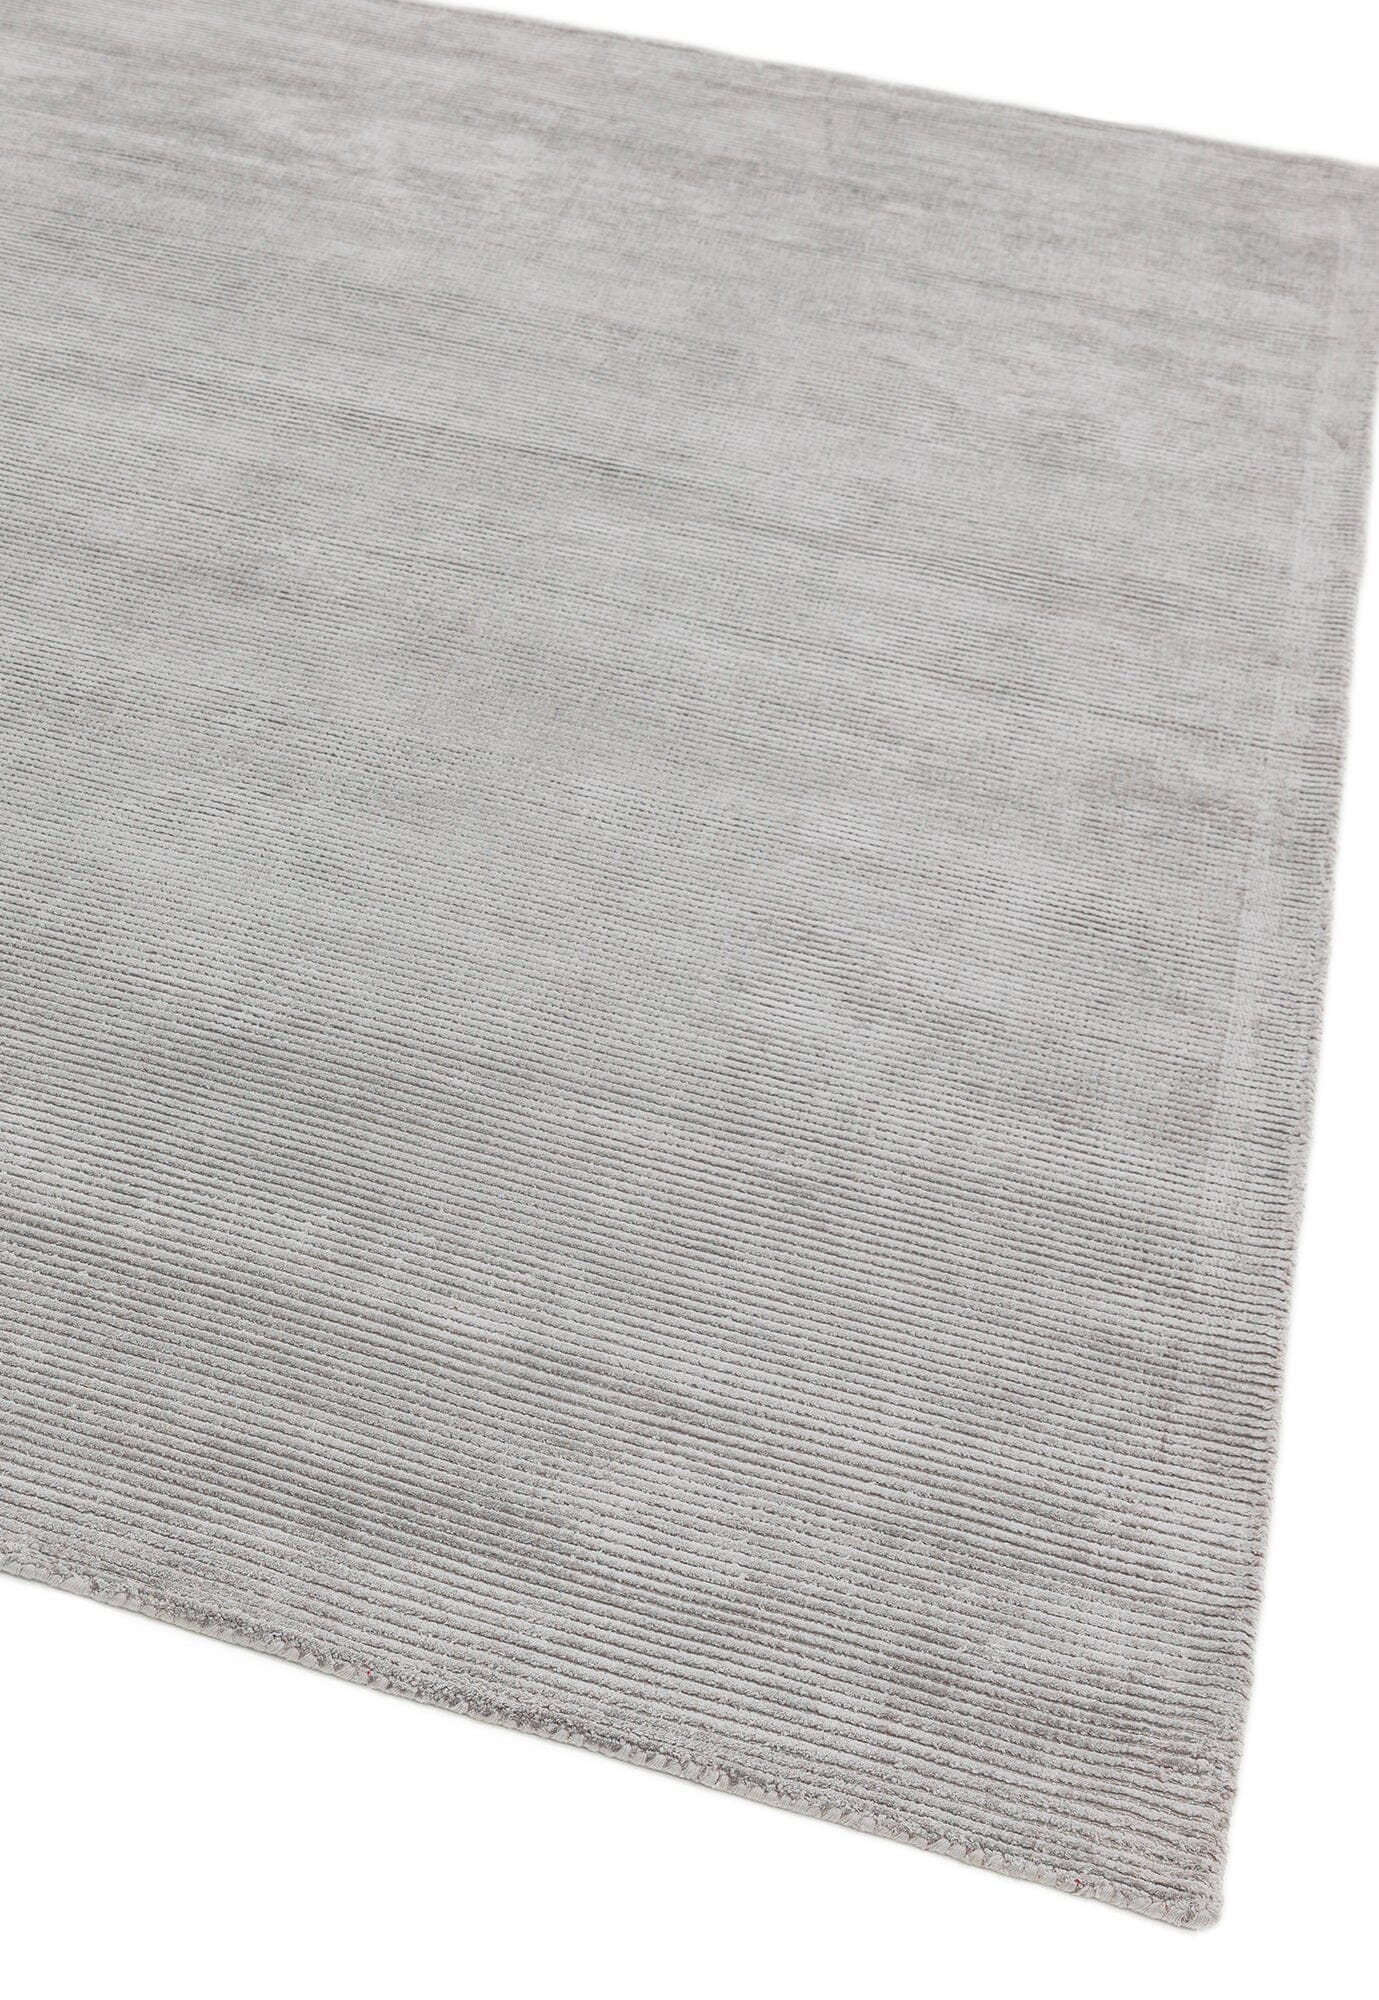  Asiatic Carpets-Asiatic Carpets Reko Hand Woven Rug Silver - 160 x 230cm-Grey, Silver 669 